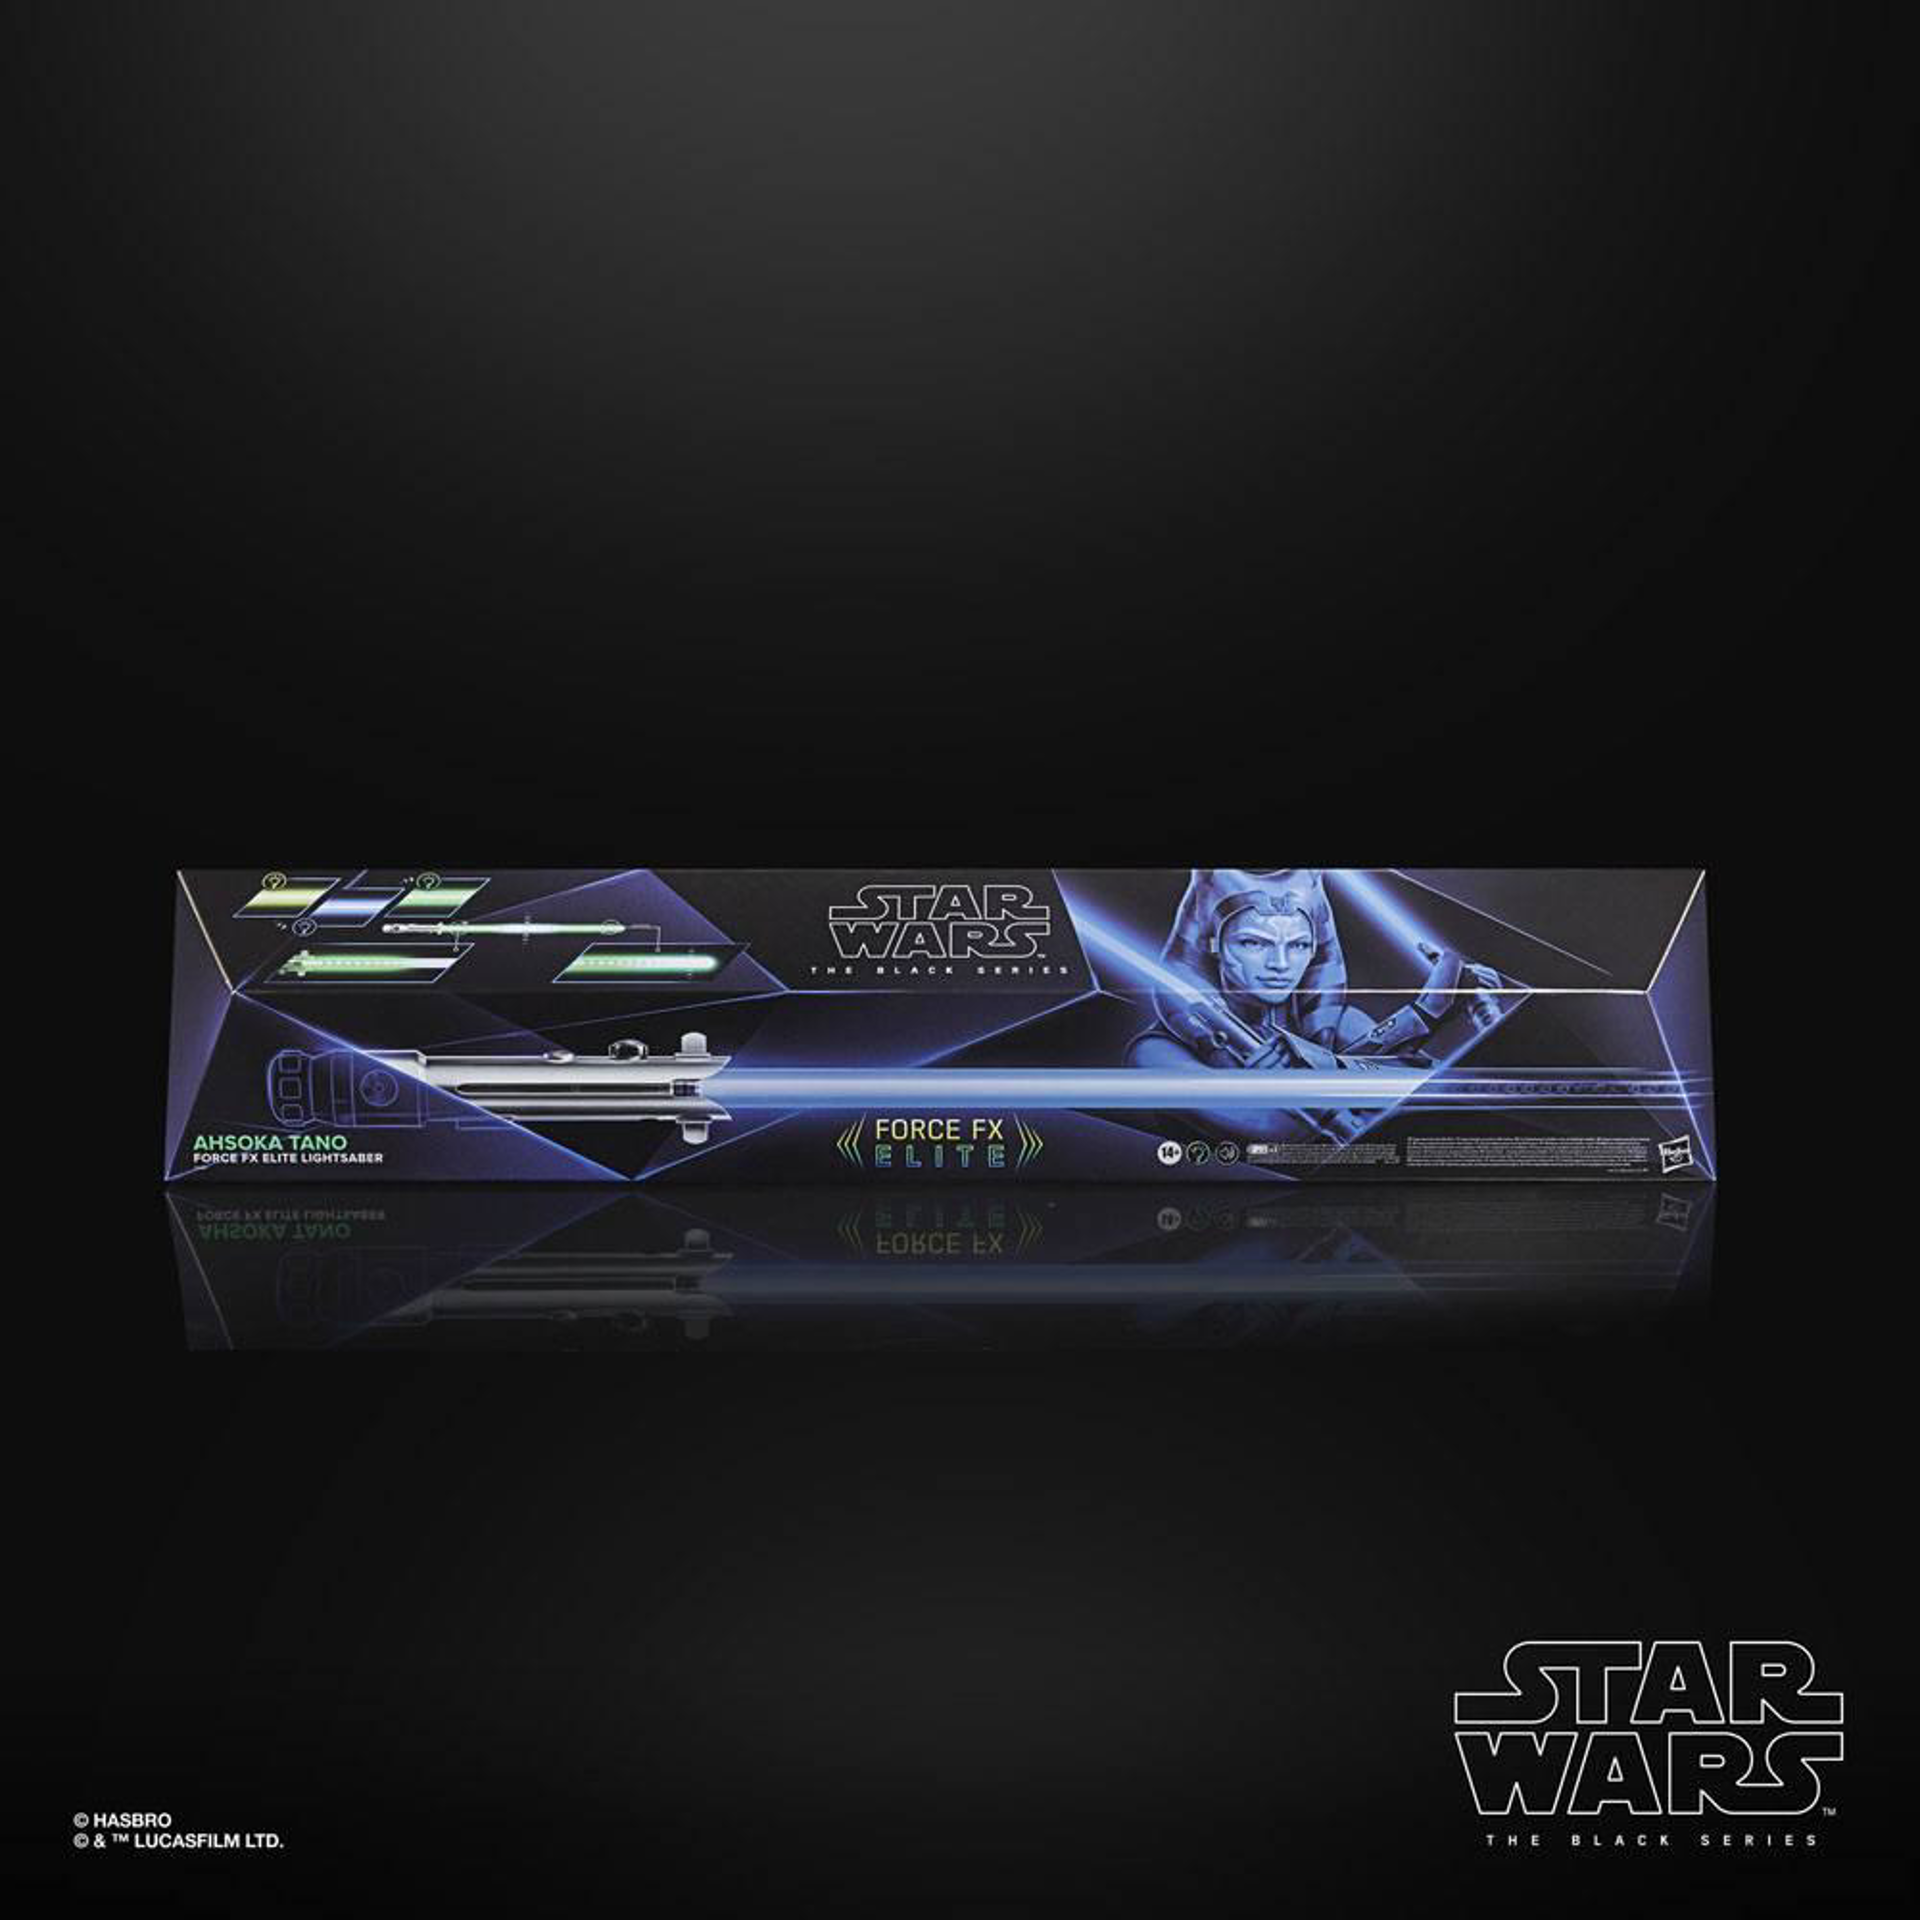 Star Wars The Black Series - Force FX Elite - Réplique du sabre laser de Ahsoka Tano